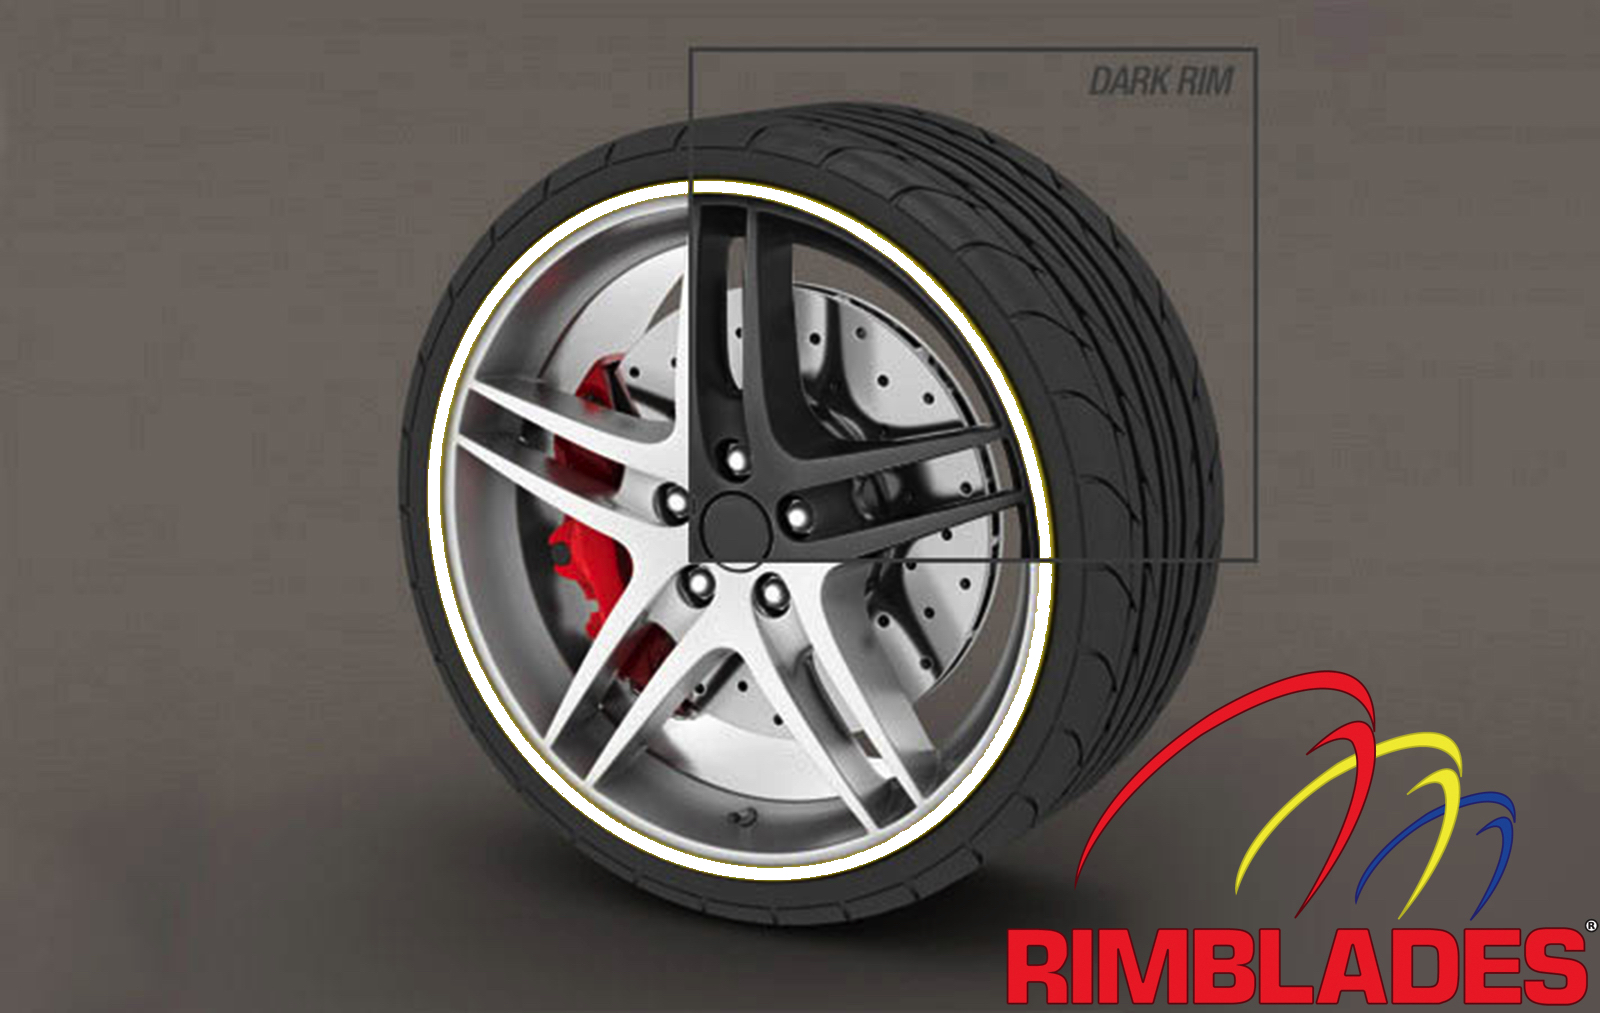 Alloy Rim Wheel Protection Rimblades Rimsavers